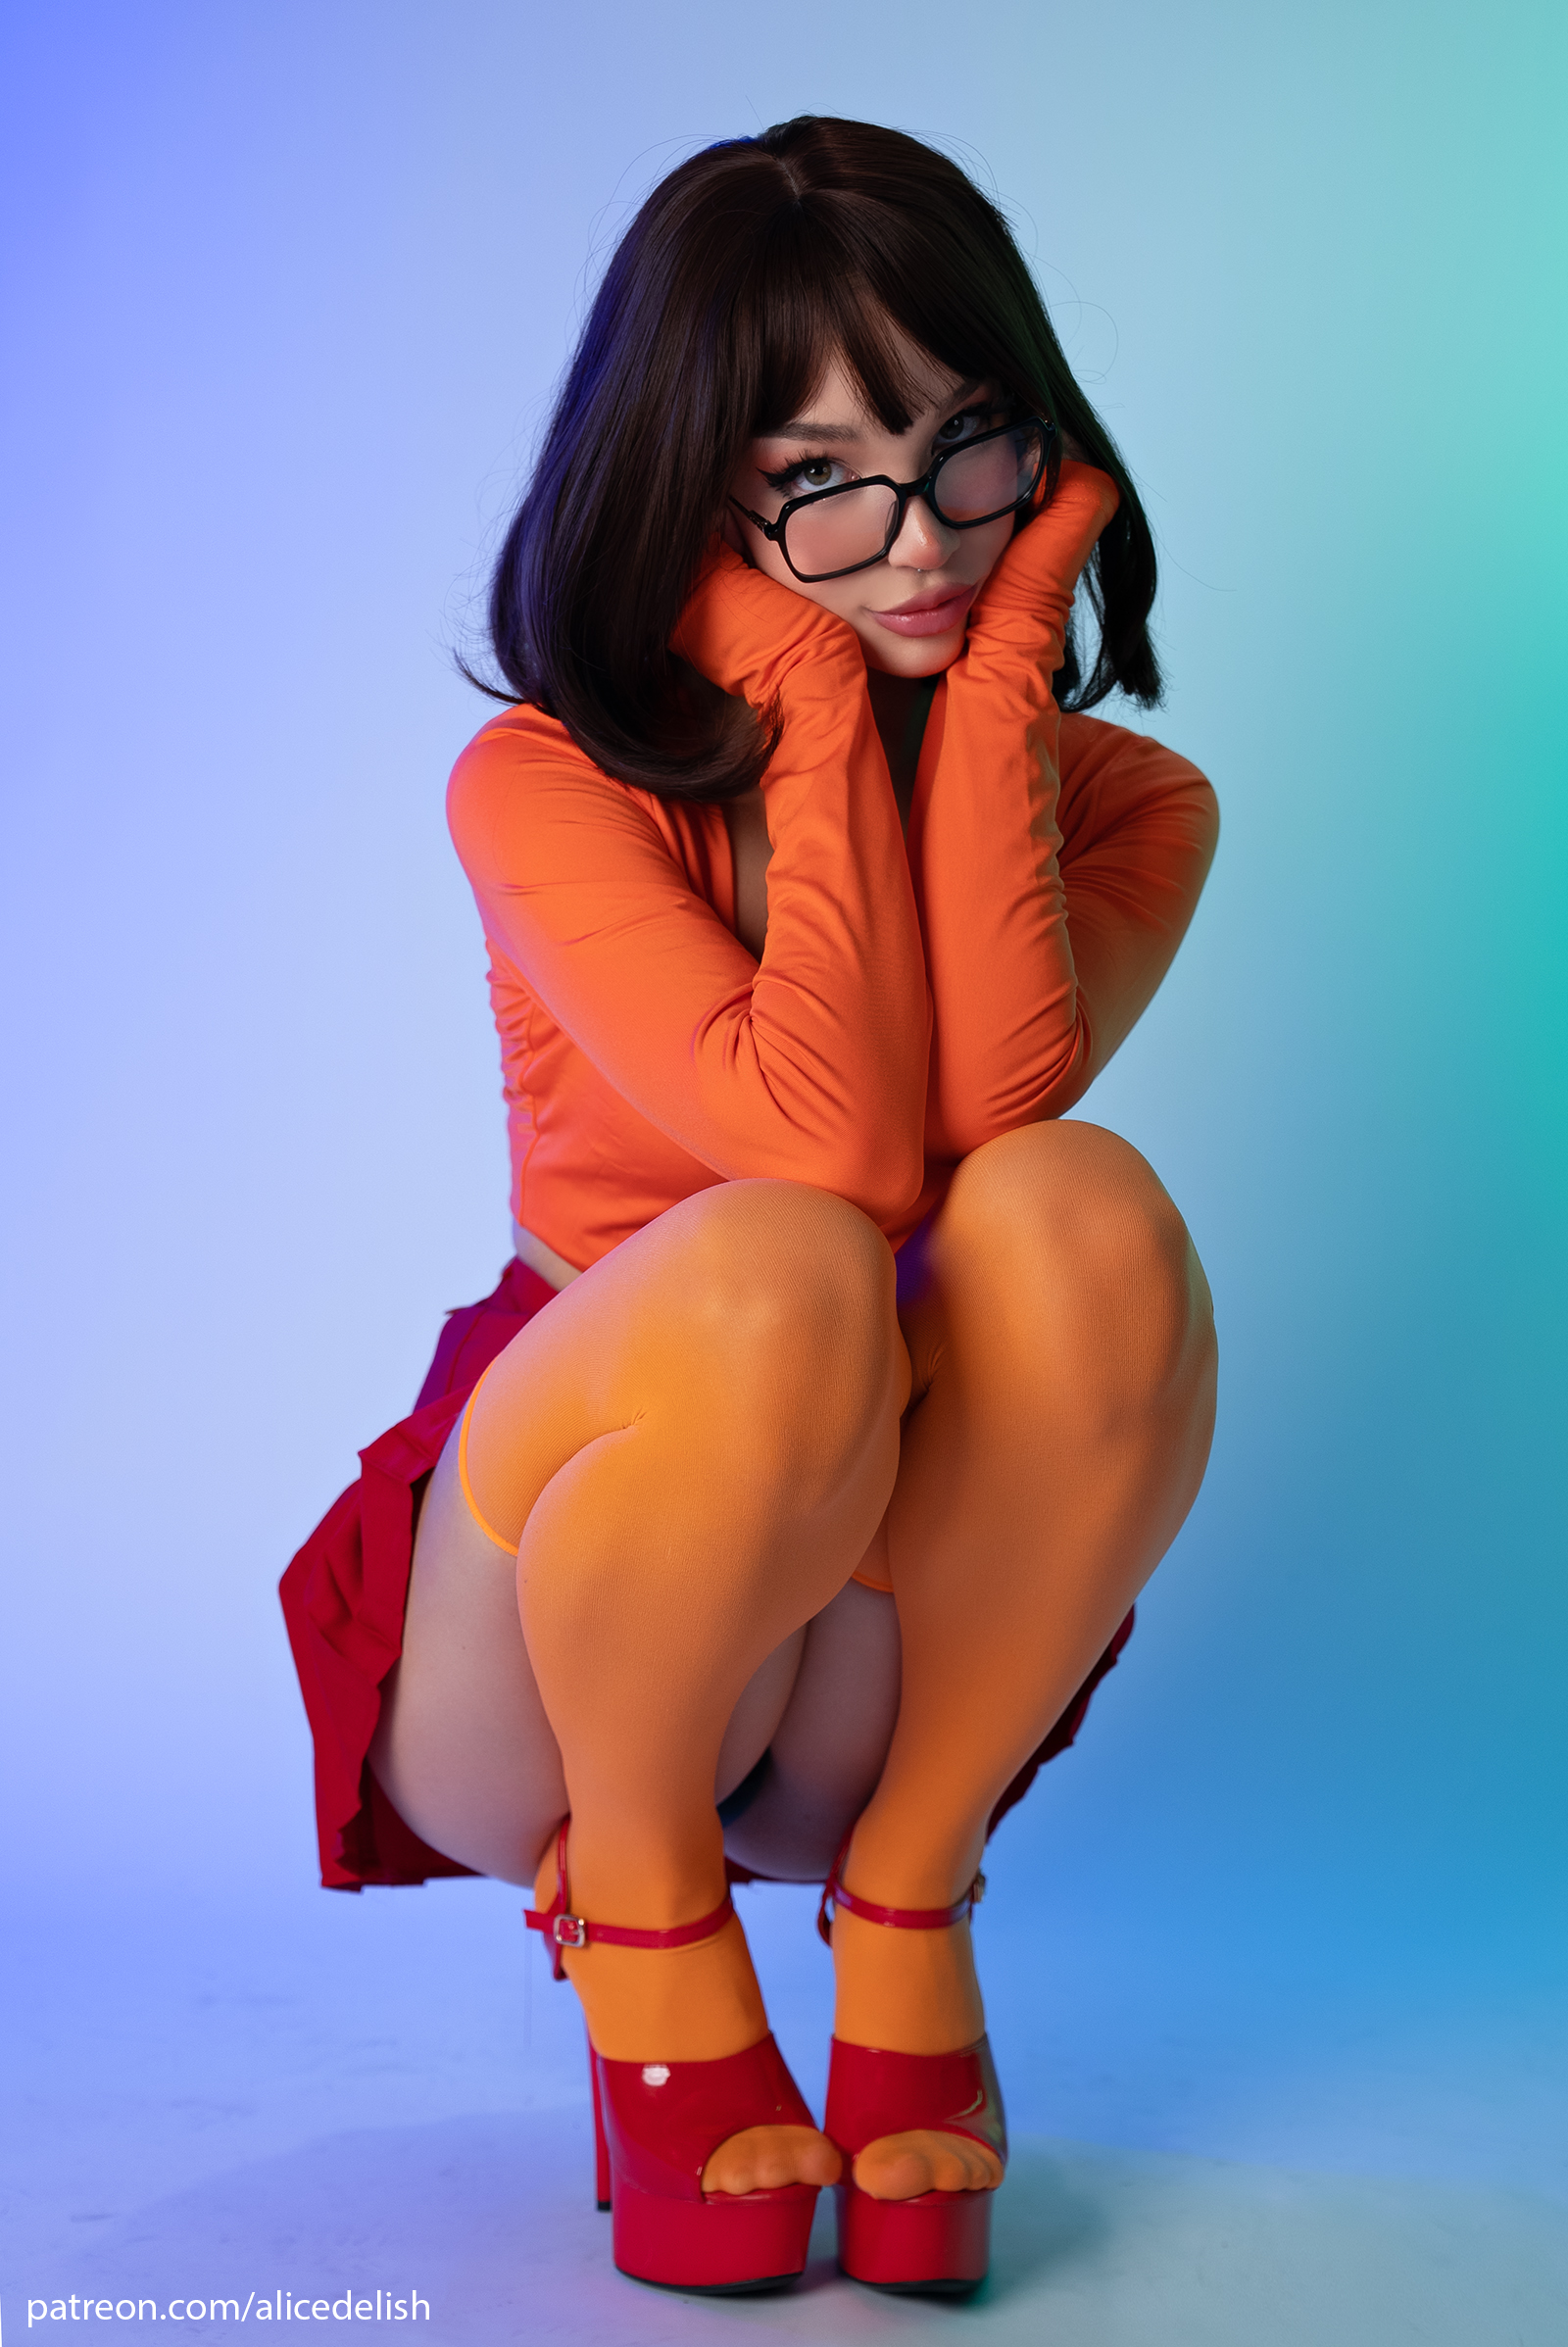 People 1600x2395 Alice Delish women model cosplay Velma Dinkley Scooby-Doo women indoors studio stockings upskirt underwear panties squatting looking at viewer high heels heels